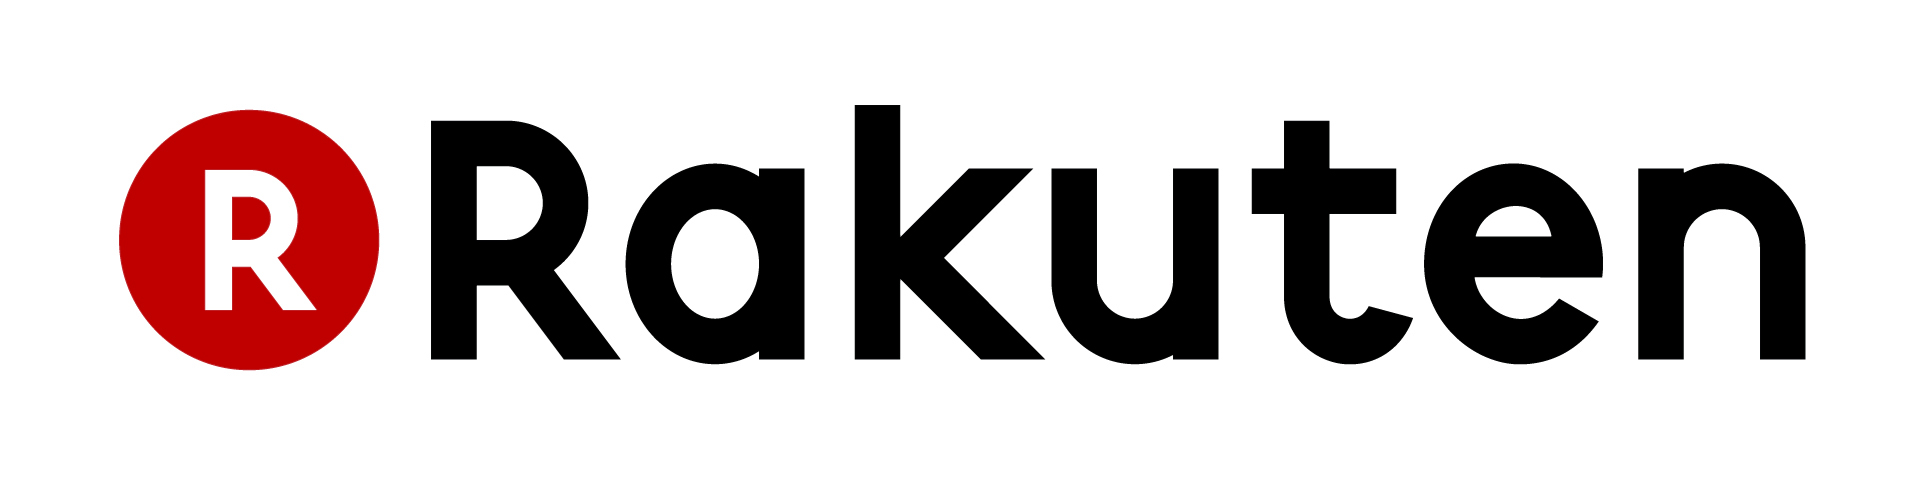 Napster bring 20 million indie tracks to Japan through Rakuten